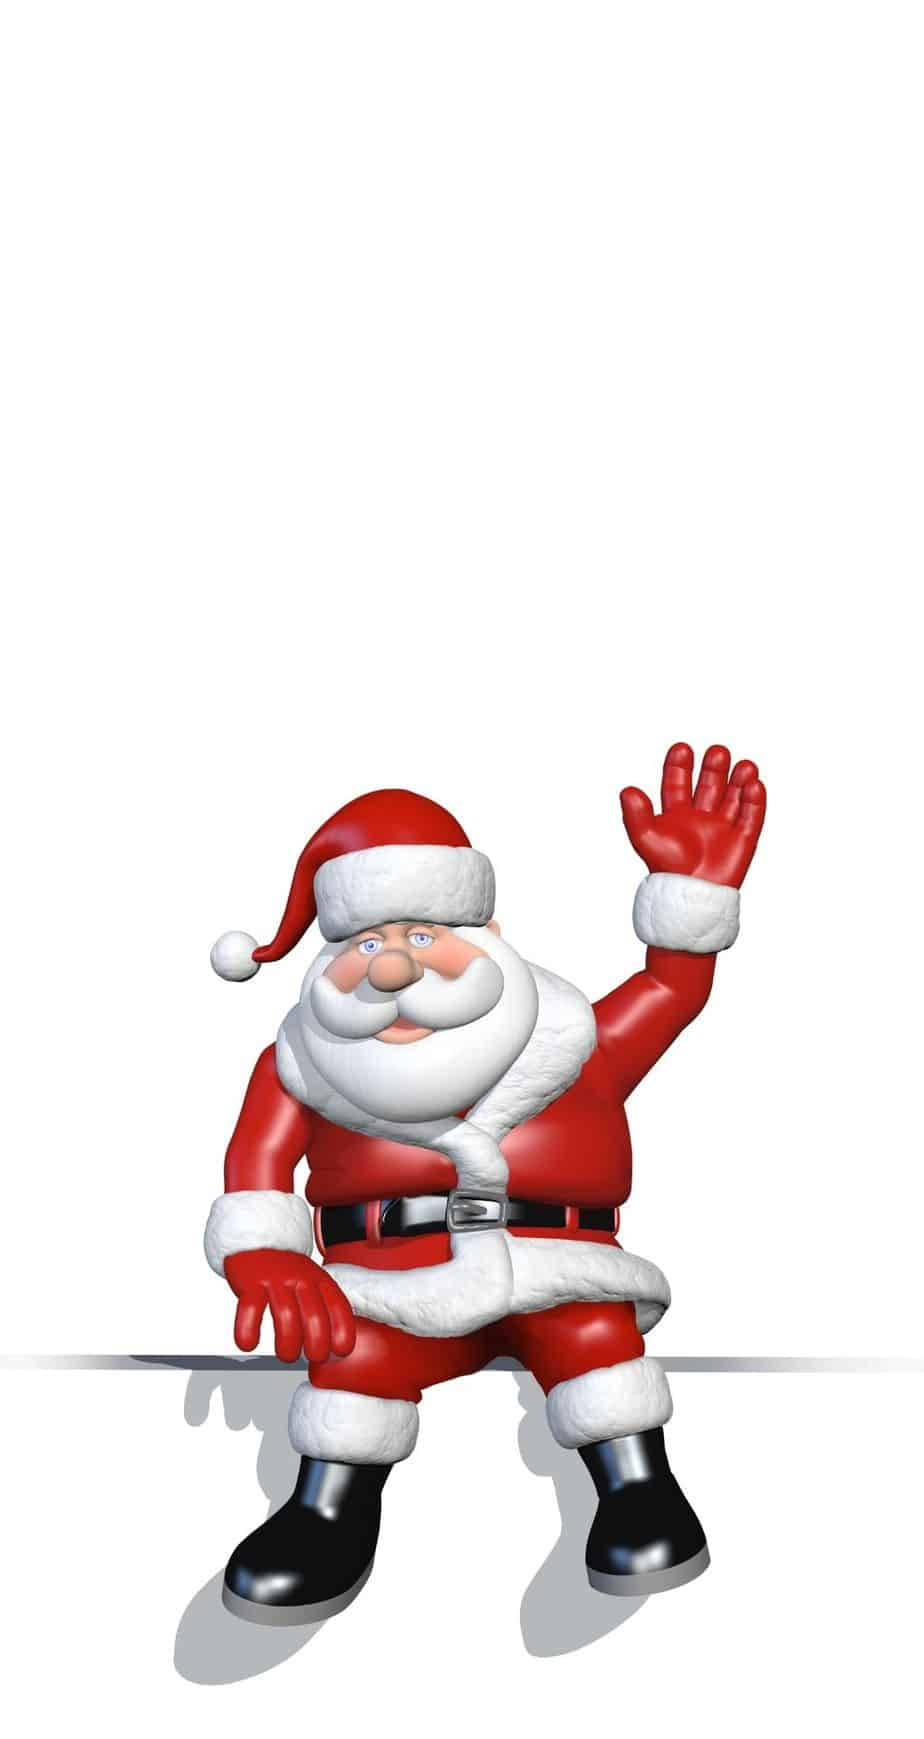 Greeting Santa Claus Christmas Iphone